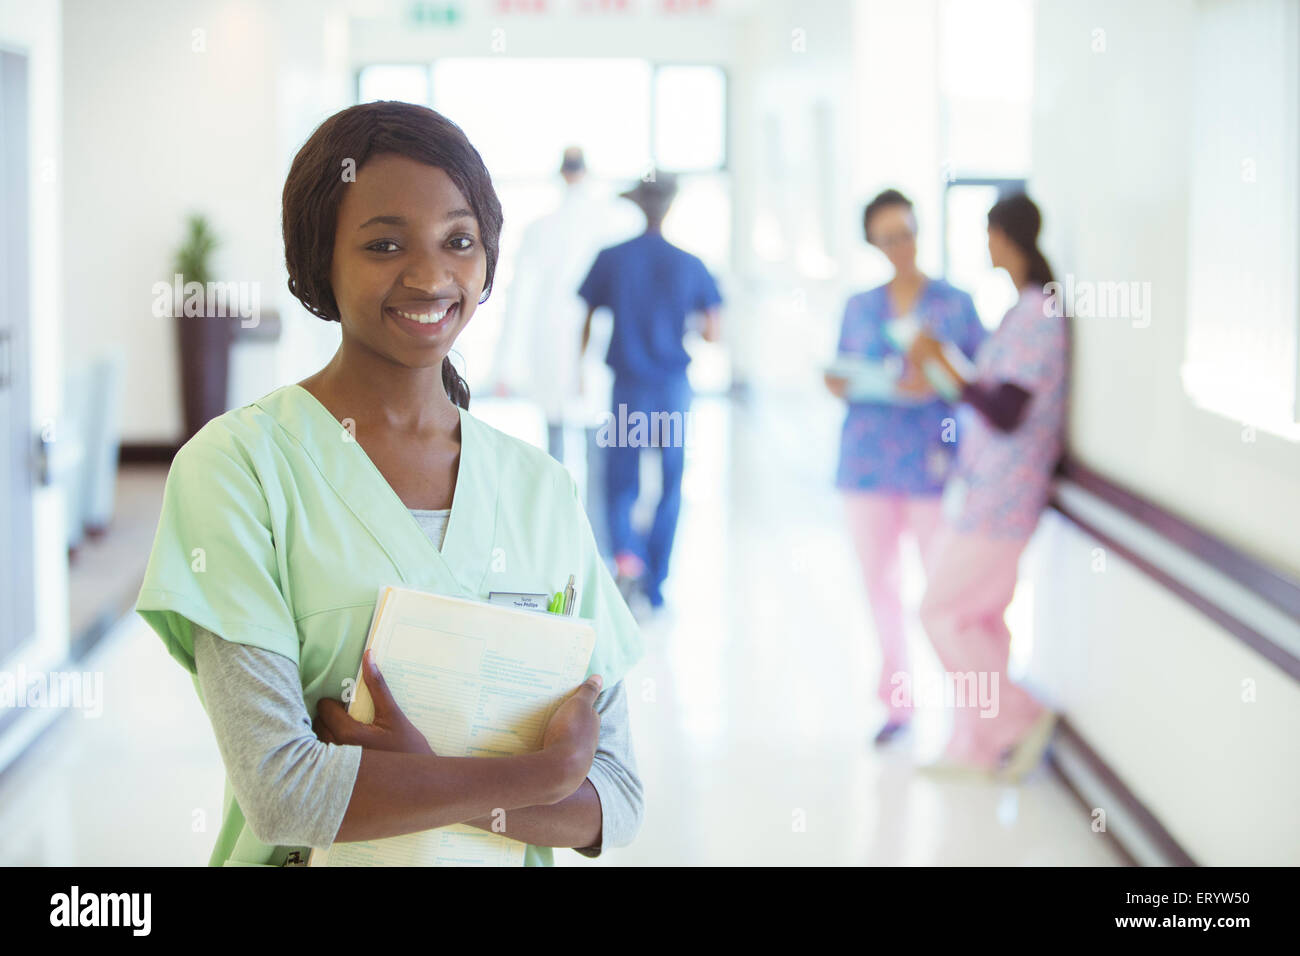 Portrait of smiling nurse in hospital corridor Banque D'Images